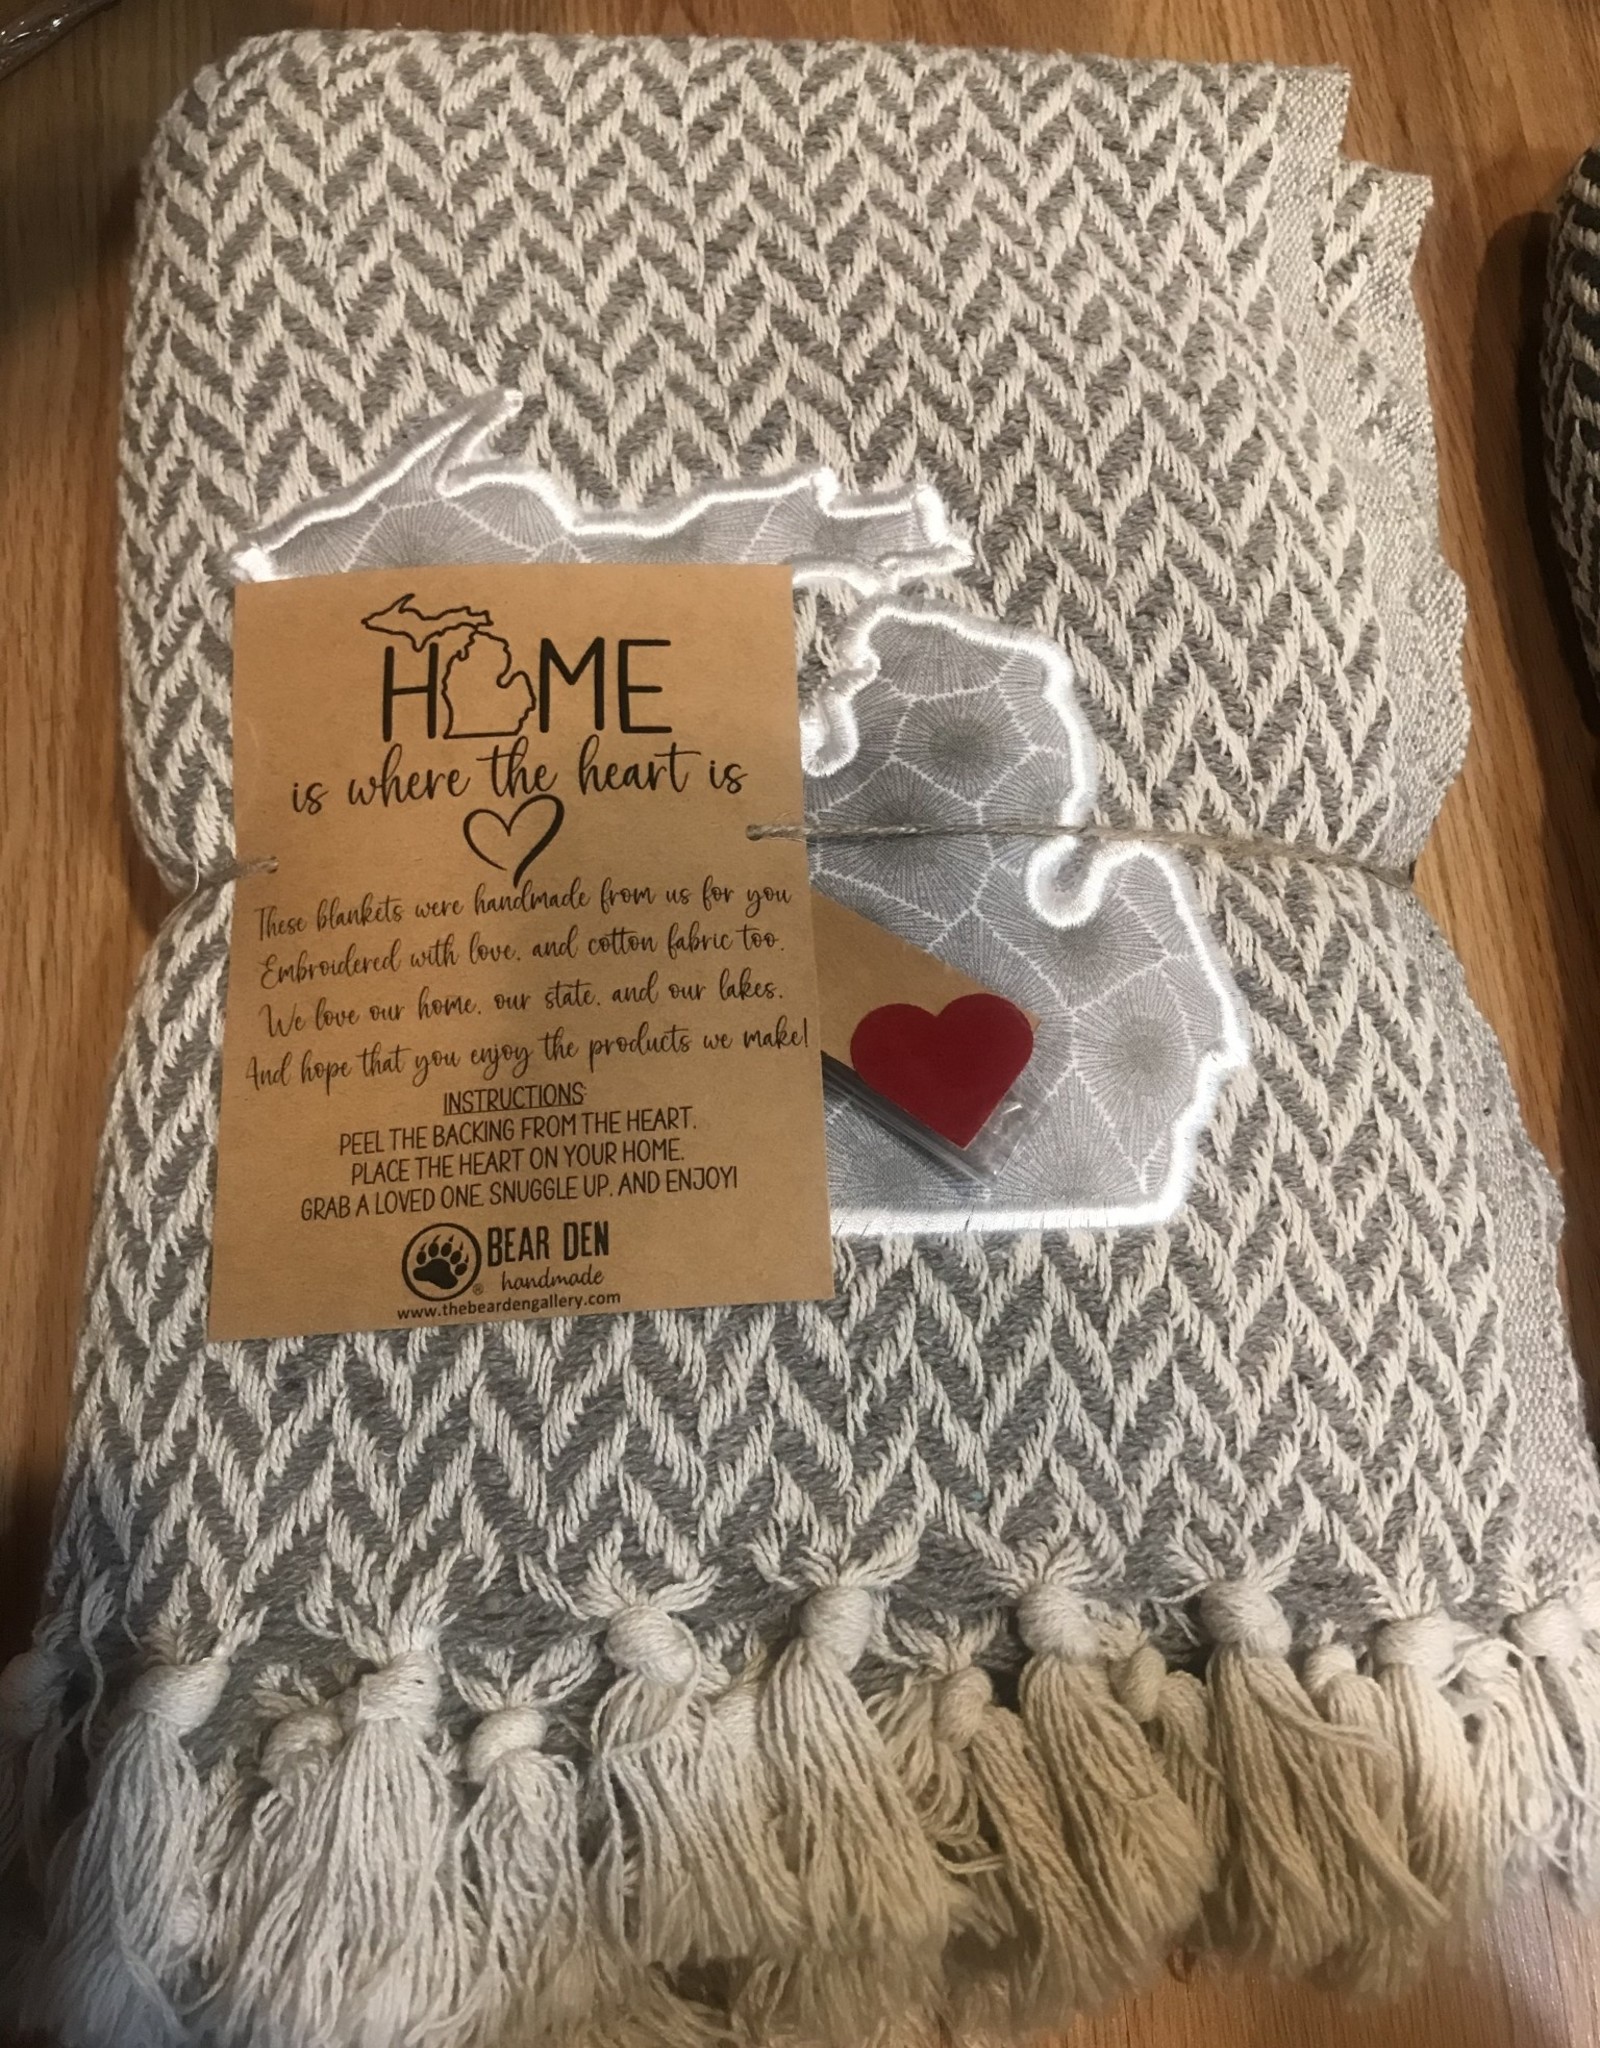 Bear Den Handmade Home is Where the Heart is - Knit Blanket - Light Grey/Petoskey Stone